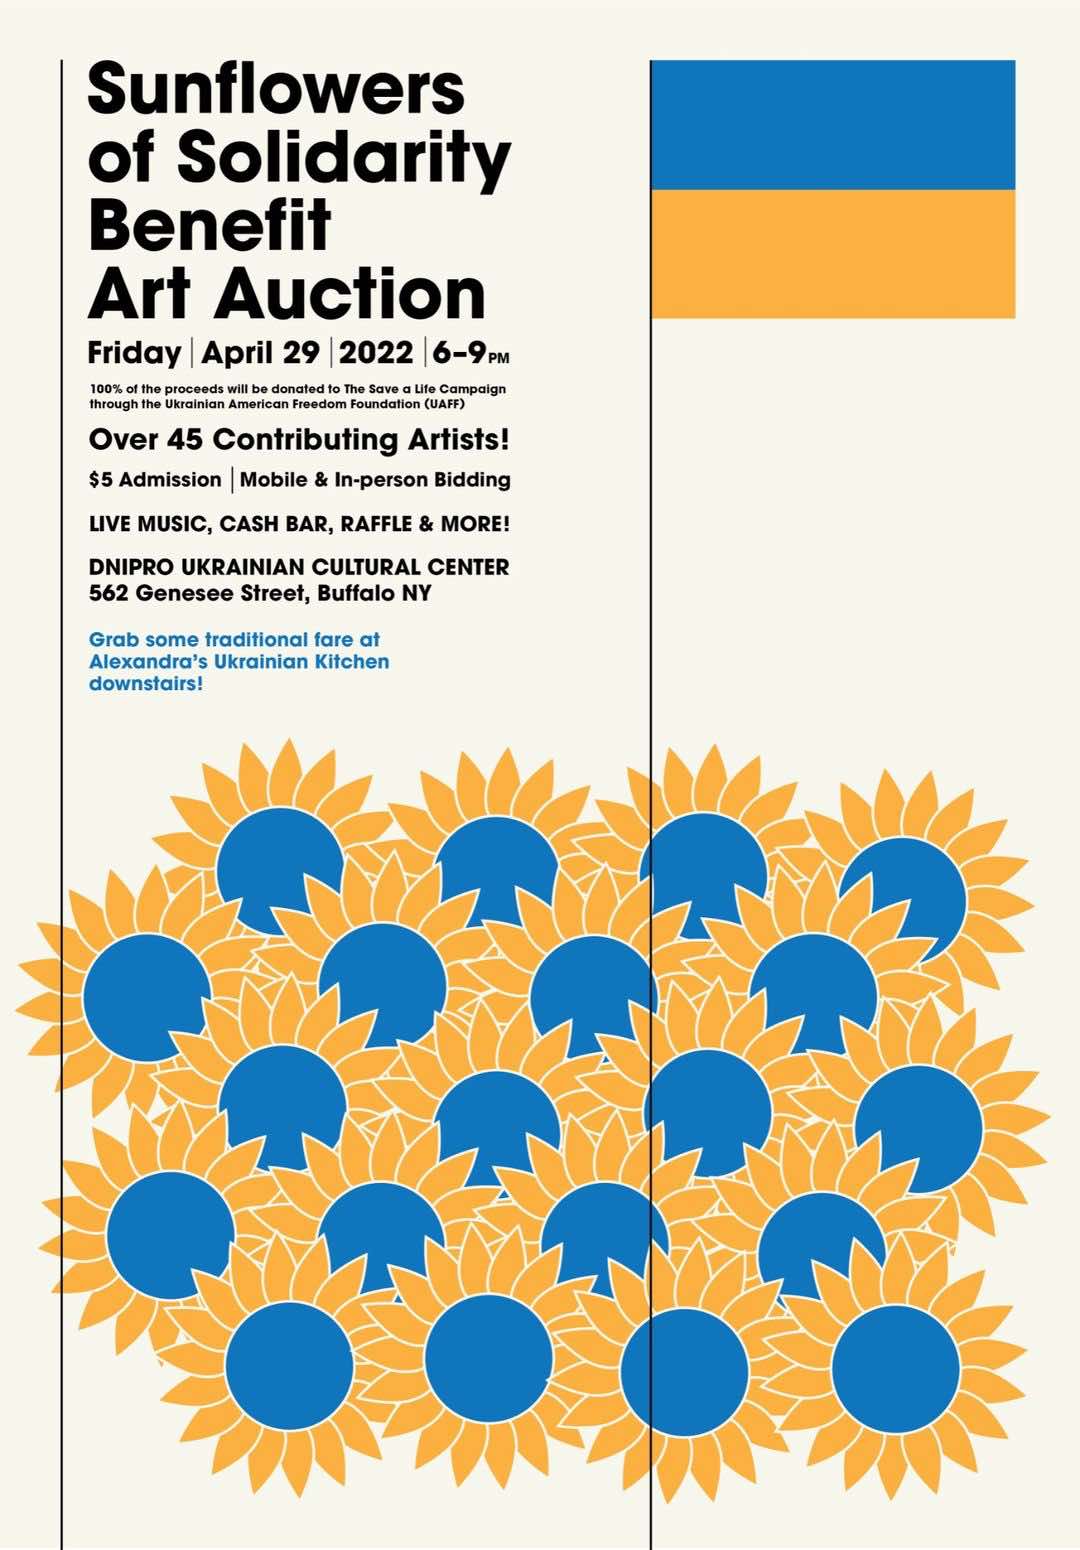 Art Auction to Benefit the Ukraine